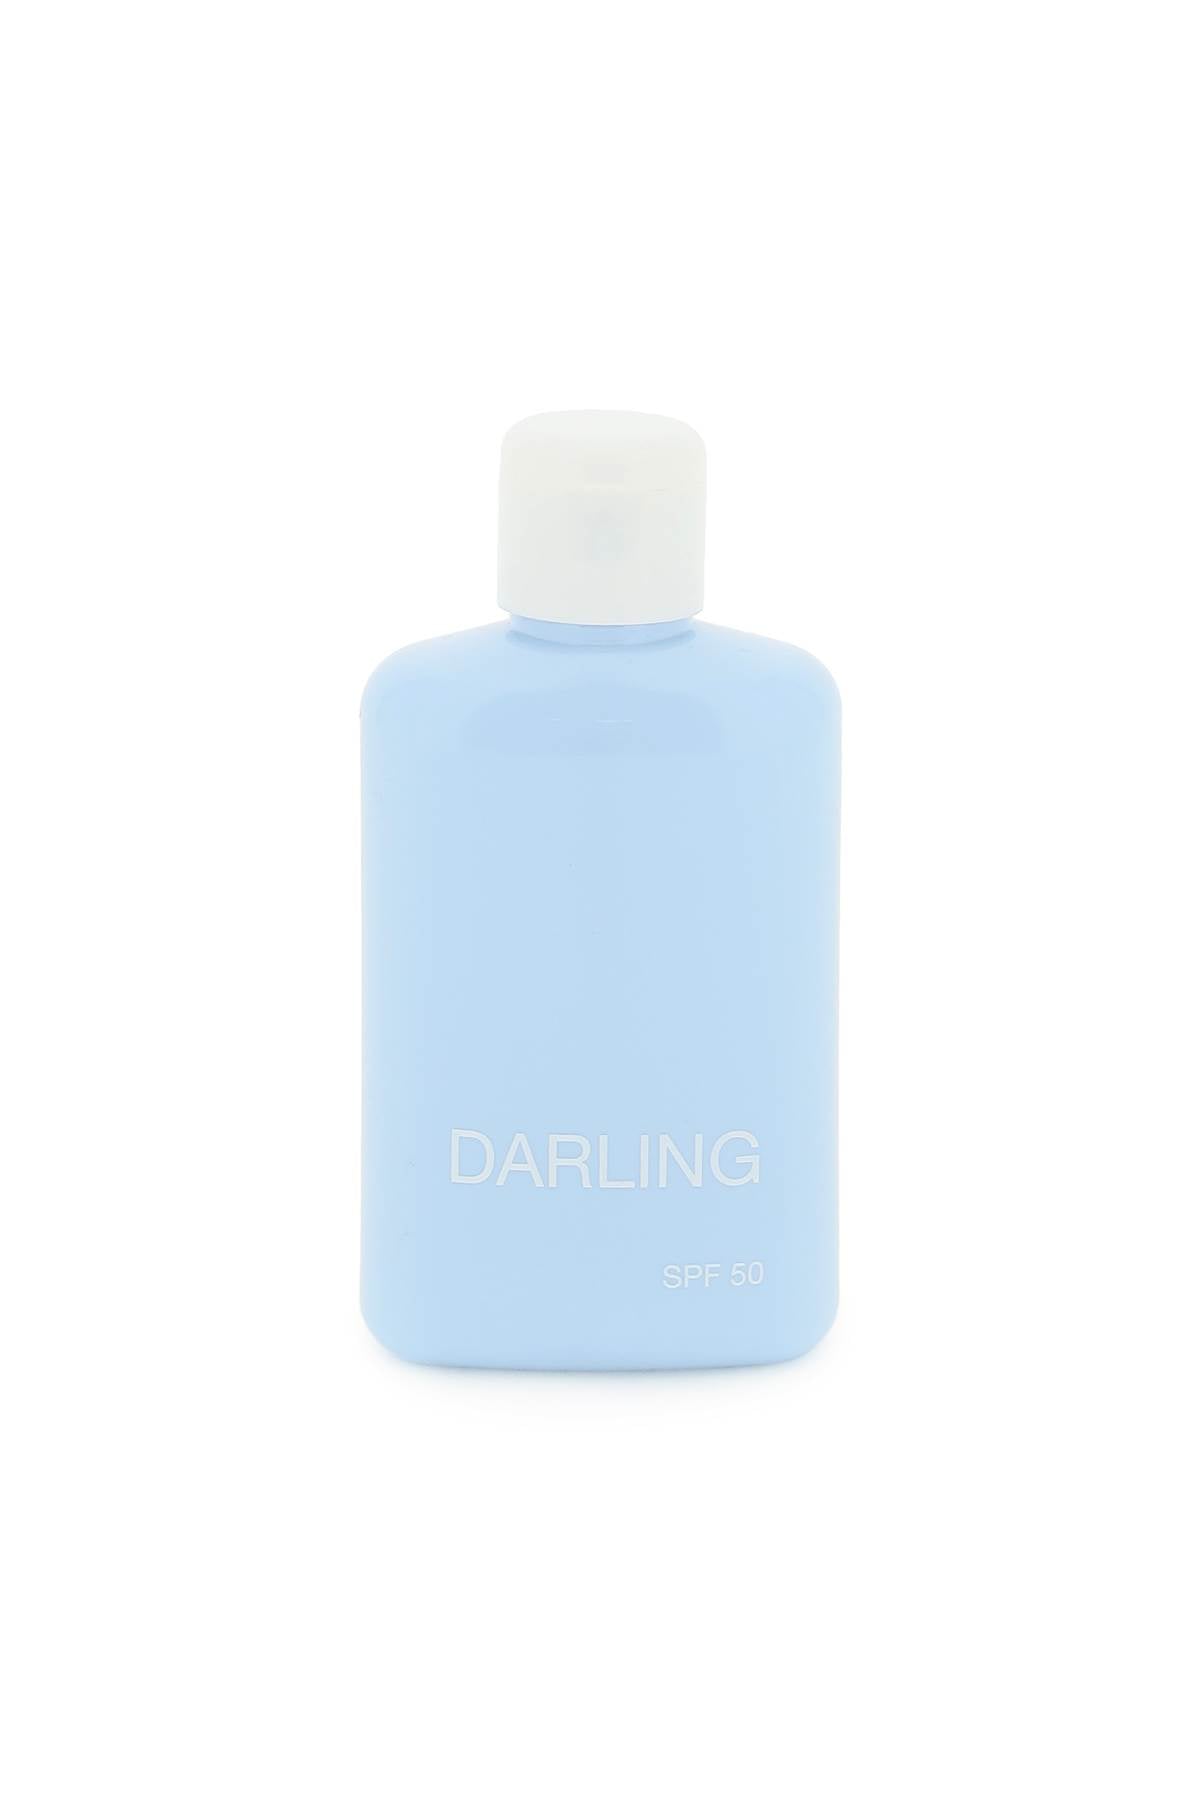 Darling high protection spf 50 sun cream - 150 ml-0